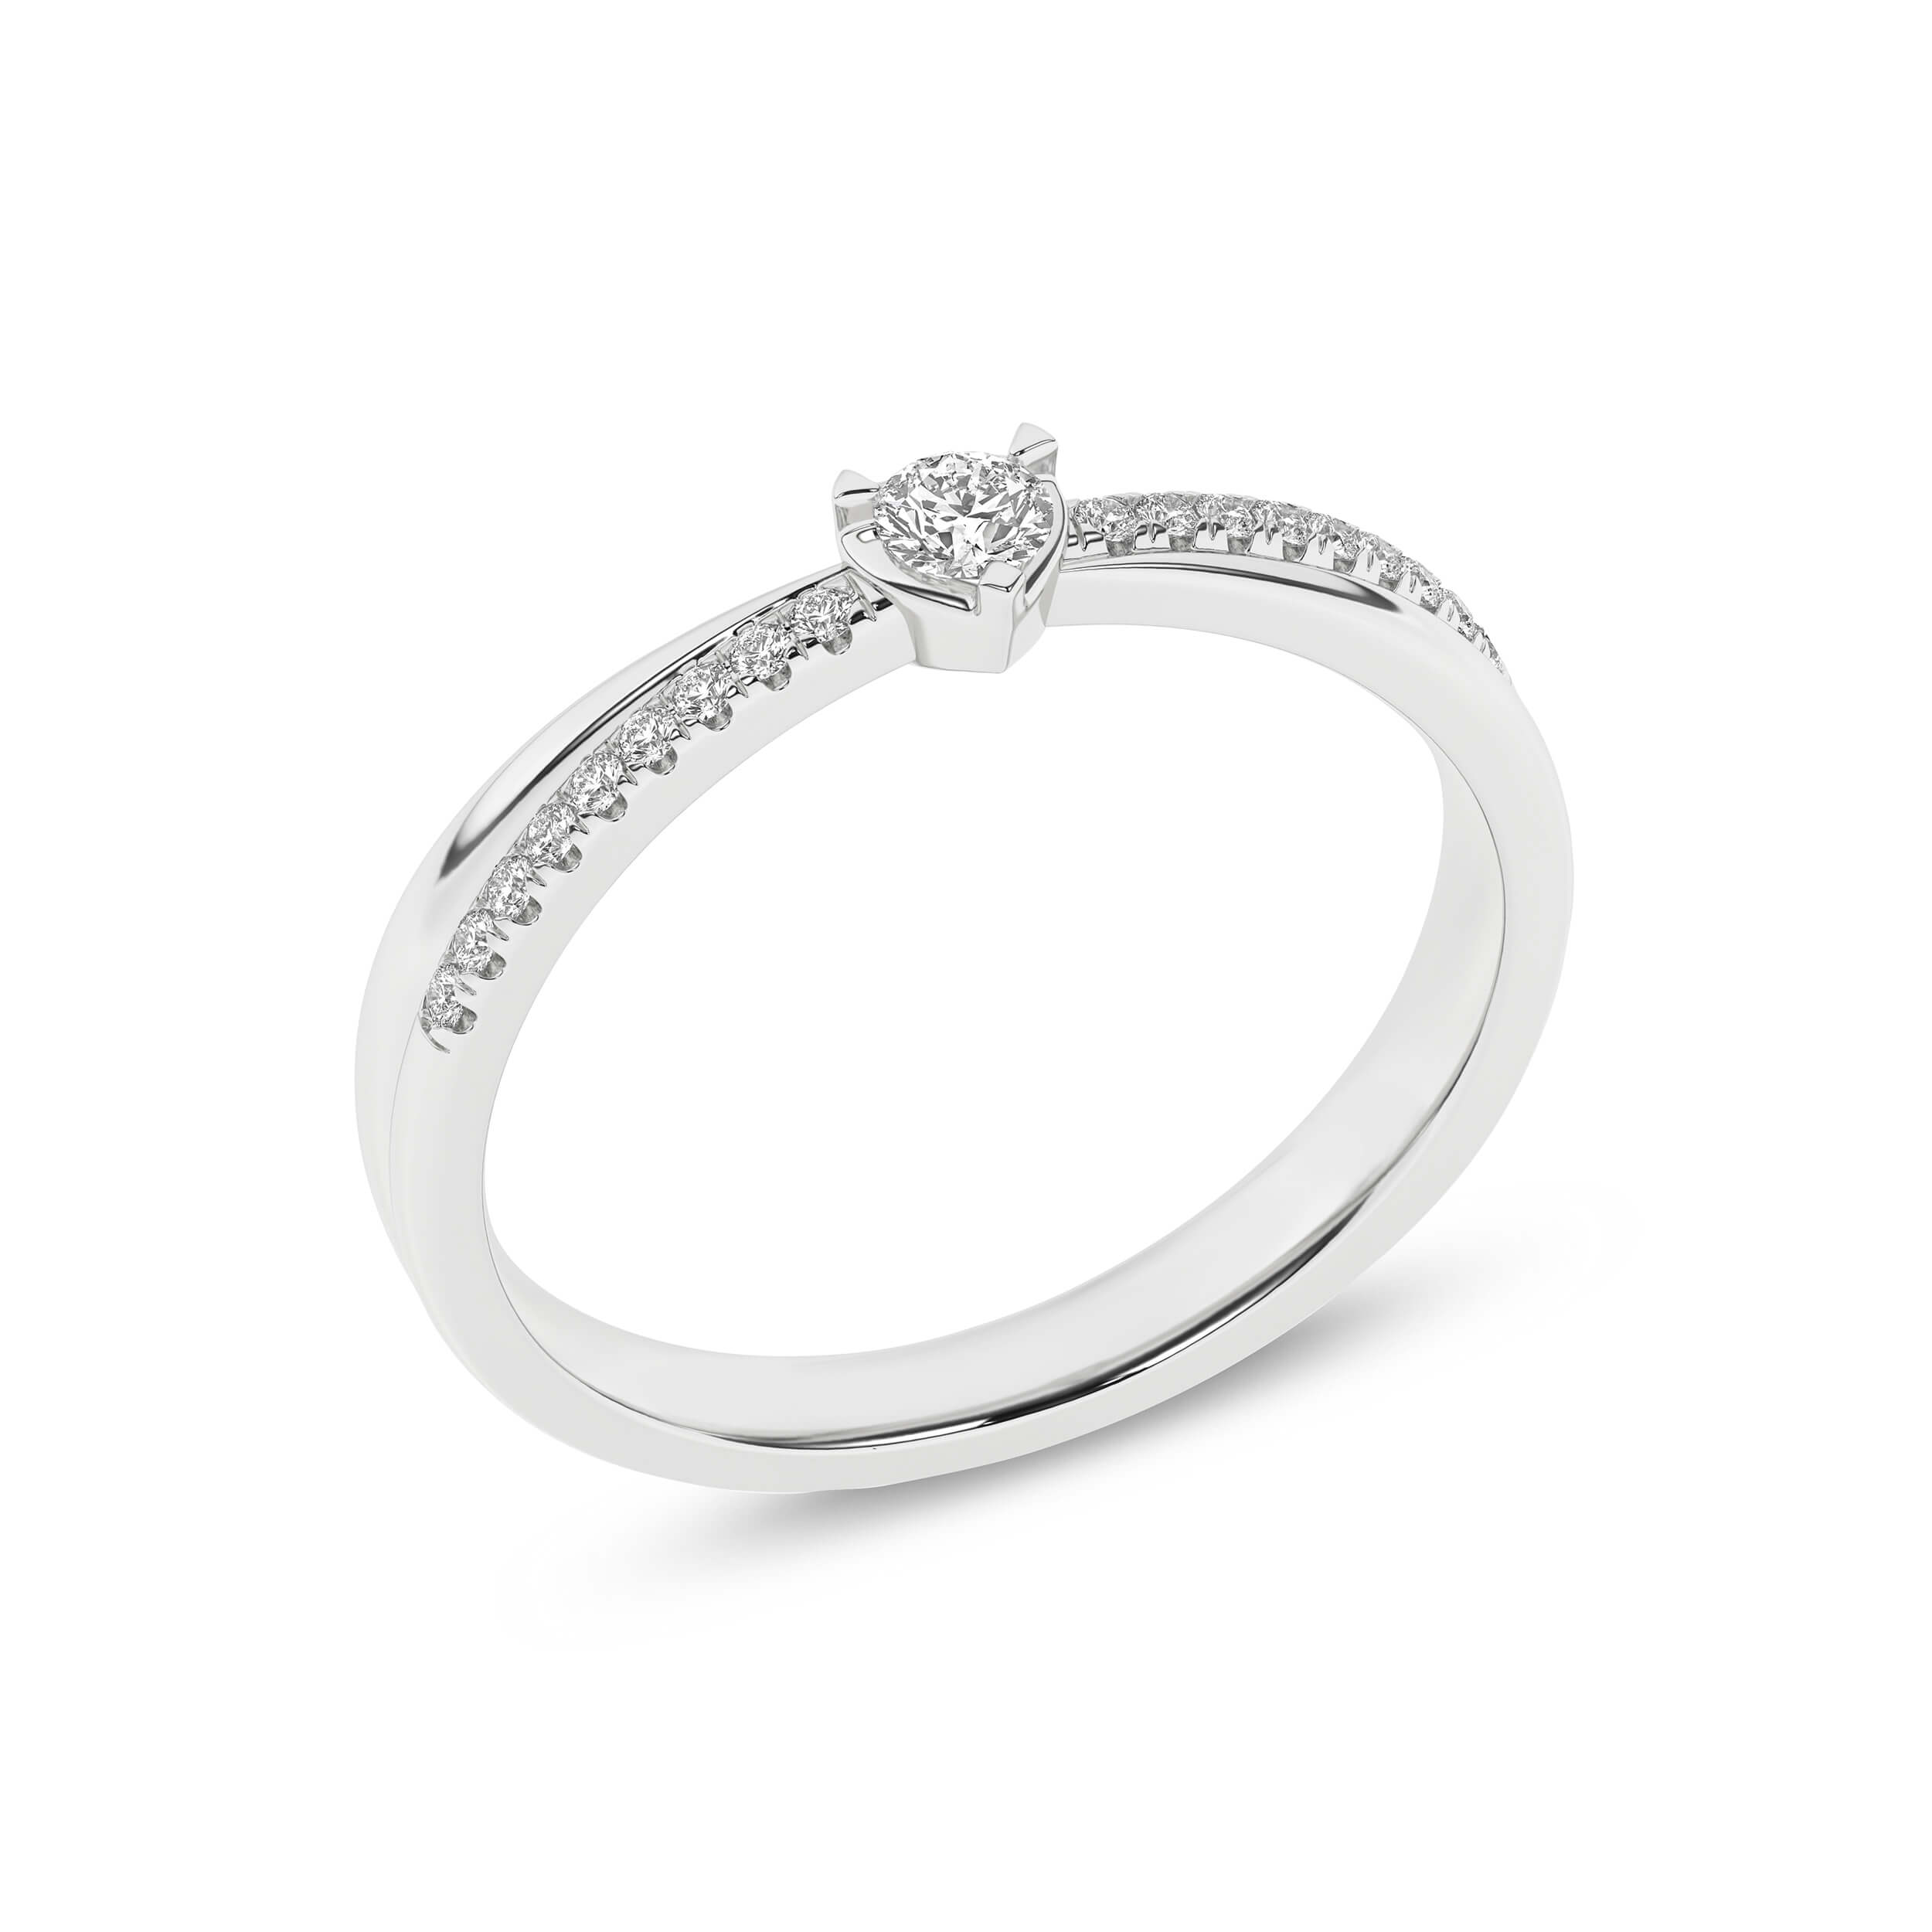 Inel de logodna din Aur Alb 14K cu Diamante 0.19Ct, articol RA4649, previzualizare foto 4